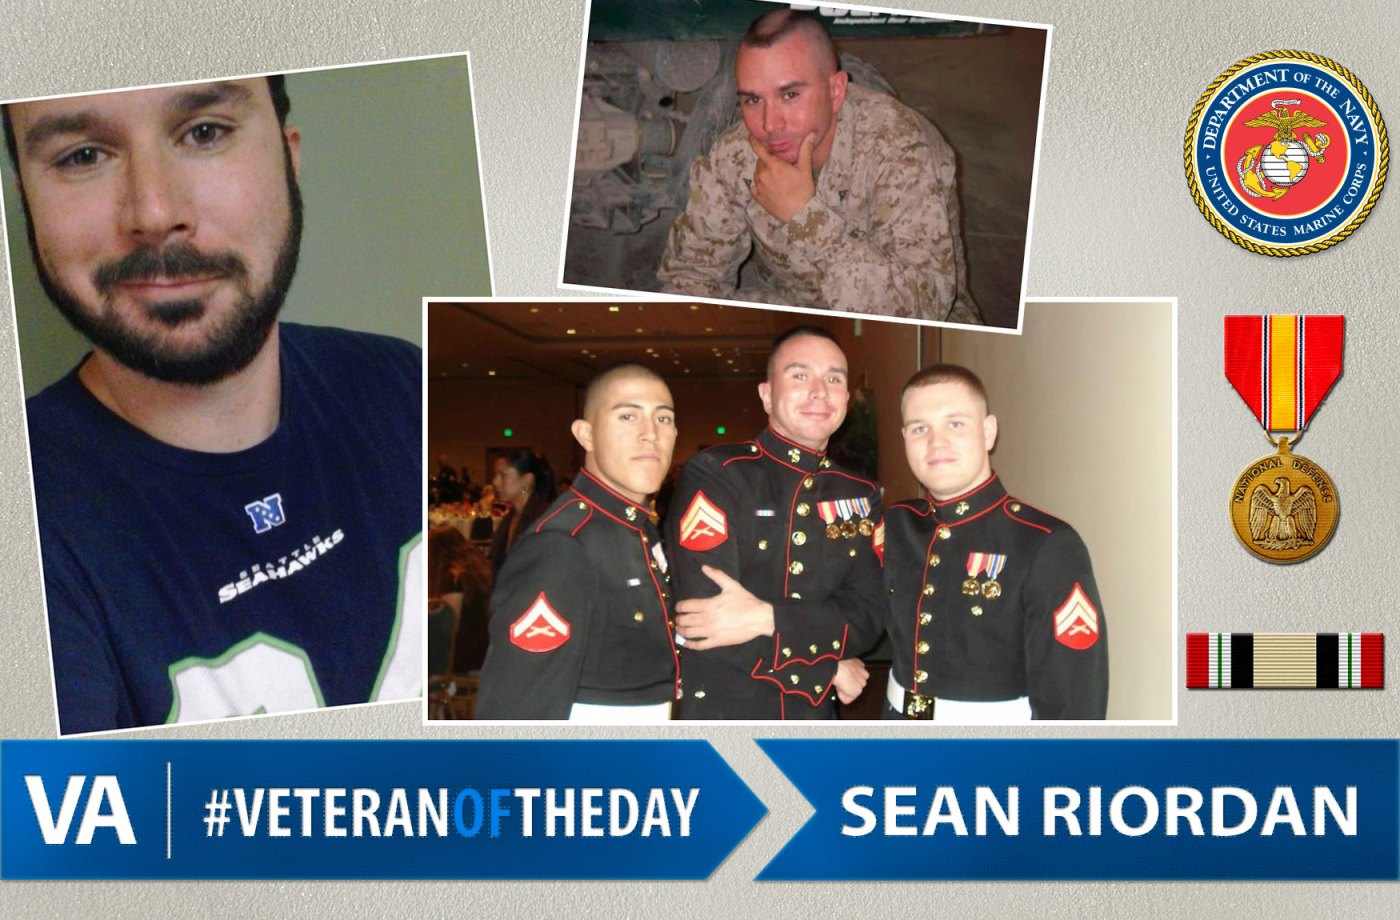 Sean Riordan - Veteran of the Day